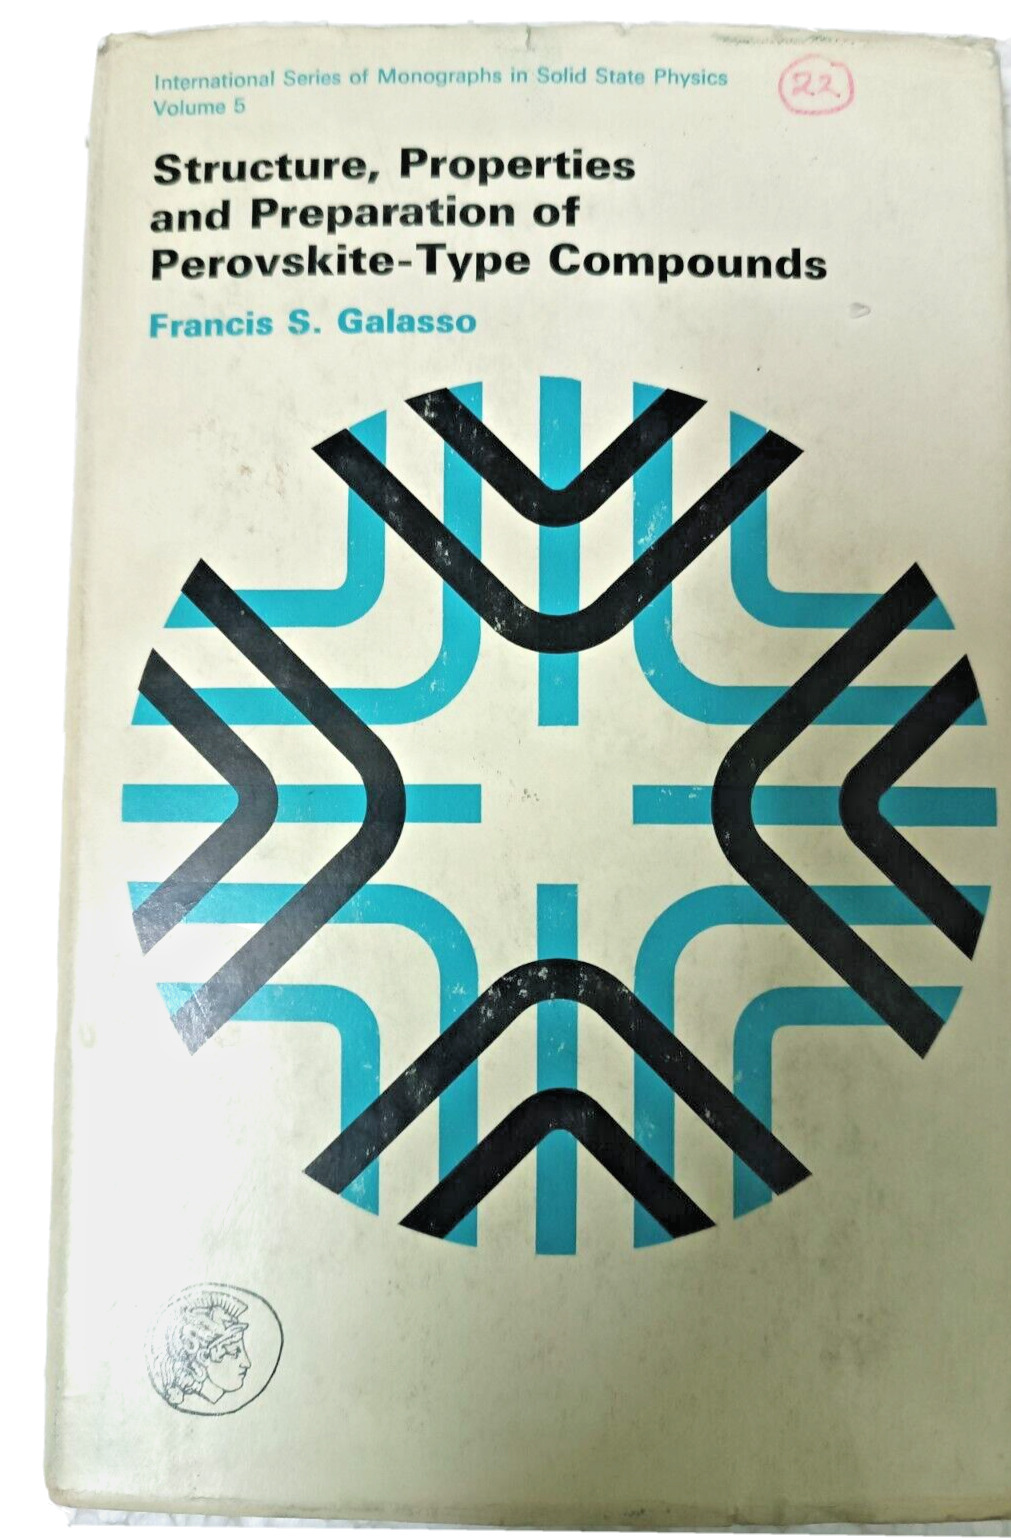 PERGAMON PRESS: STRUCTURE, PROPERTIES AND PREPRATION OF PEROVSKITE-TYPE COMPOUND